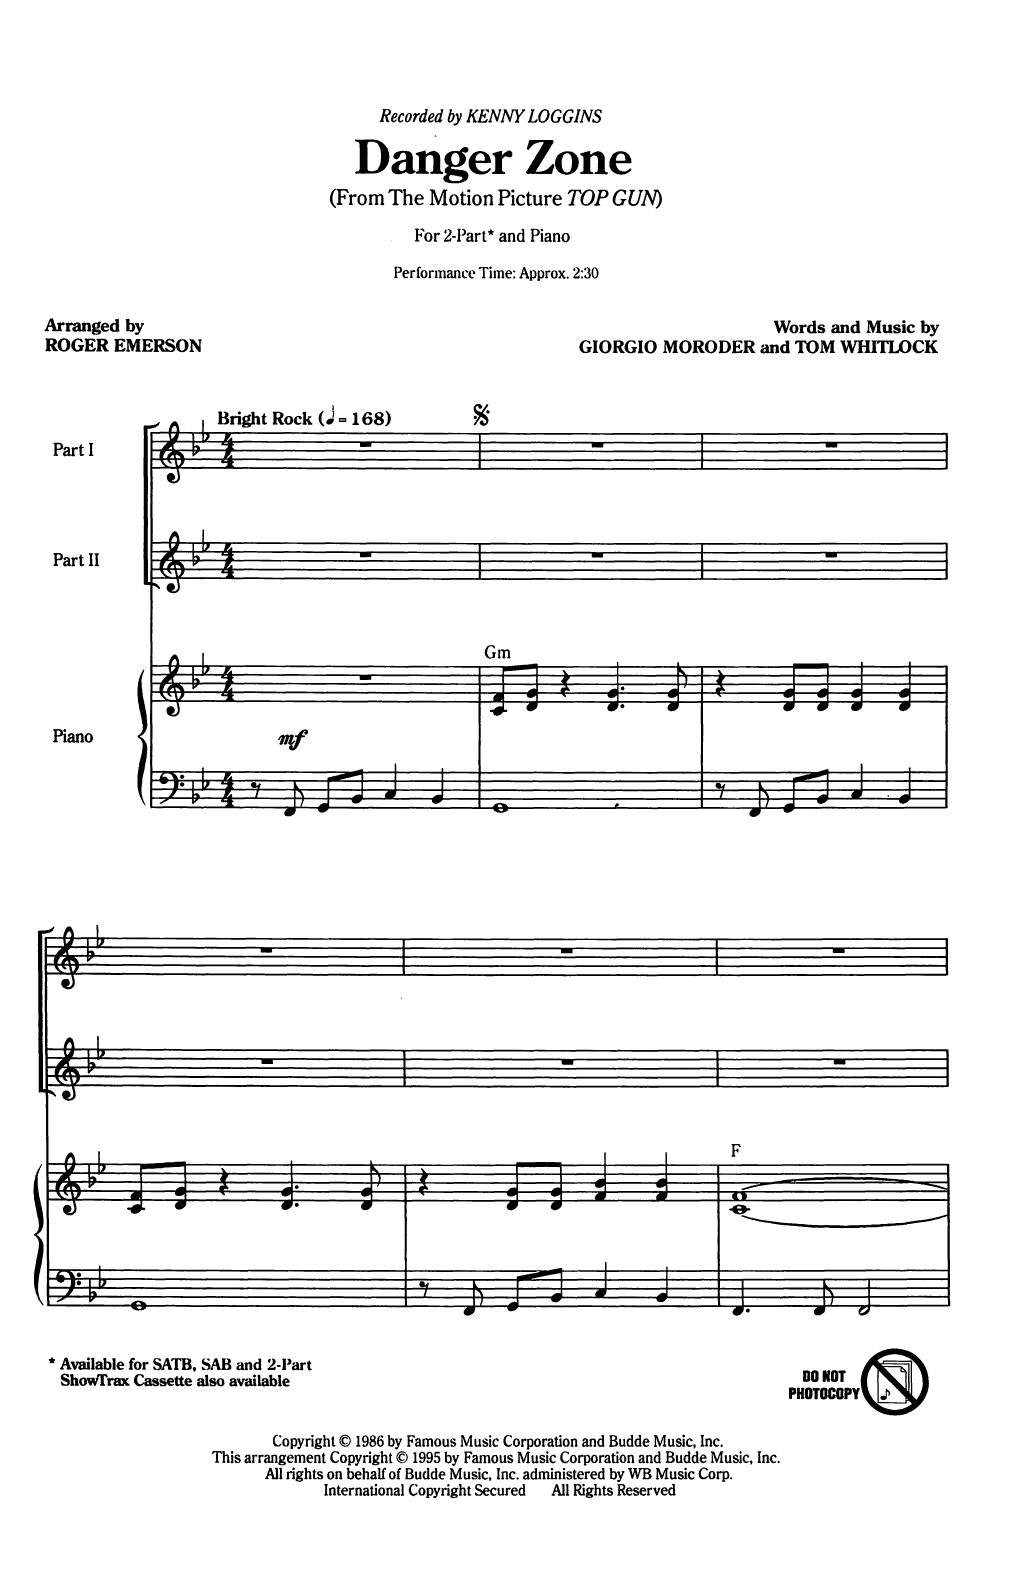 Kenny Loggins Danger Zone (arr. Roger Emerson) Sheet Music Notes & Chords for SATB Choir - Download or Print PDF